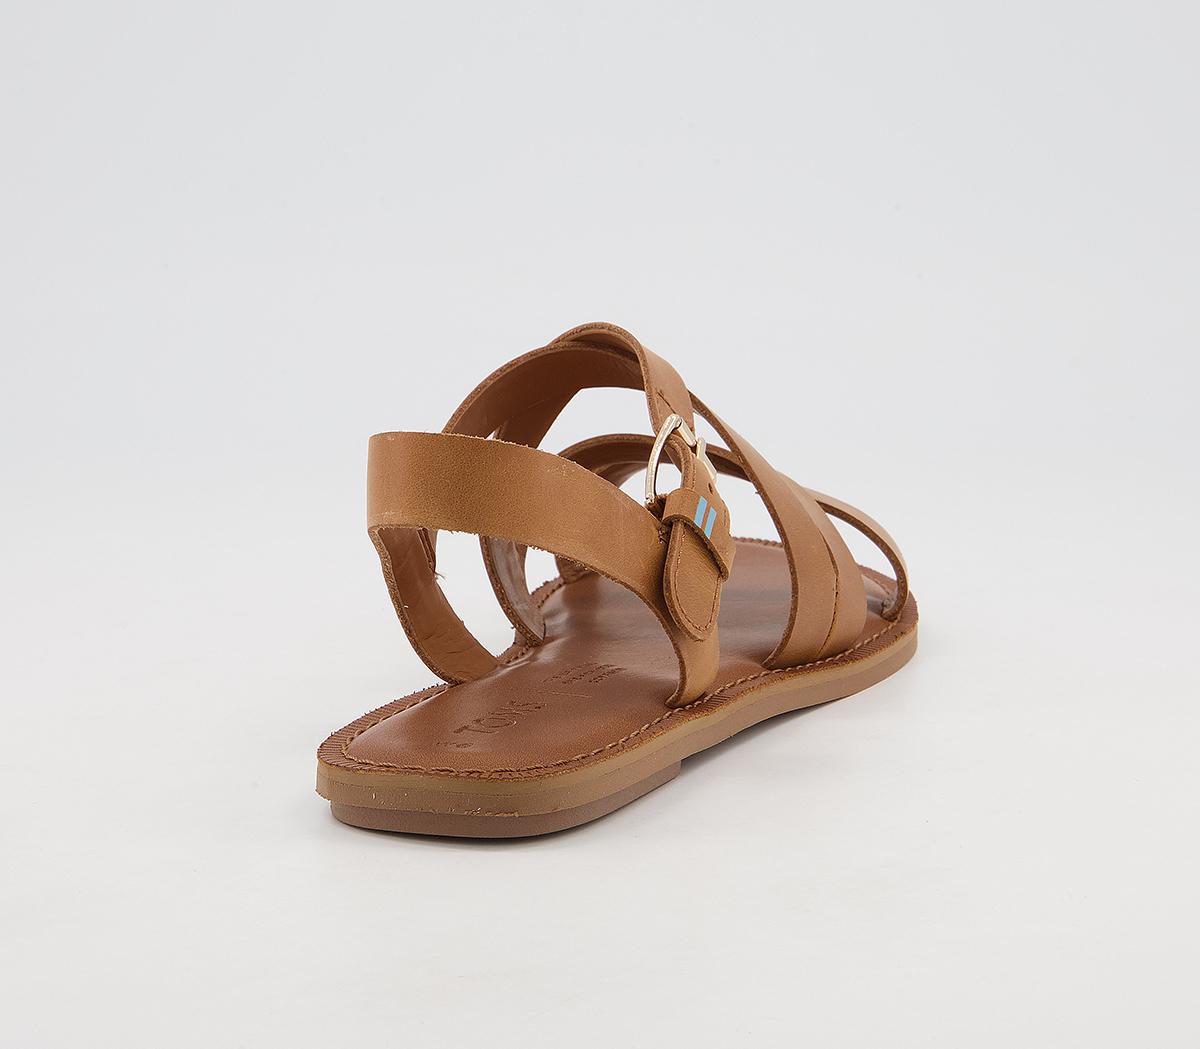 TOMS Sicily Sandals Tan Leather - Women’s Sandals